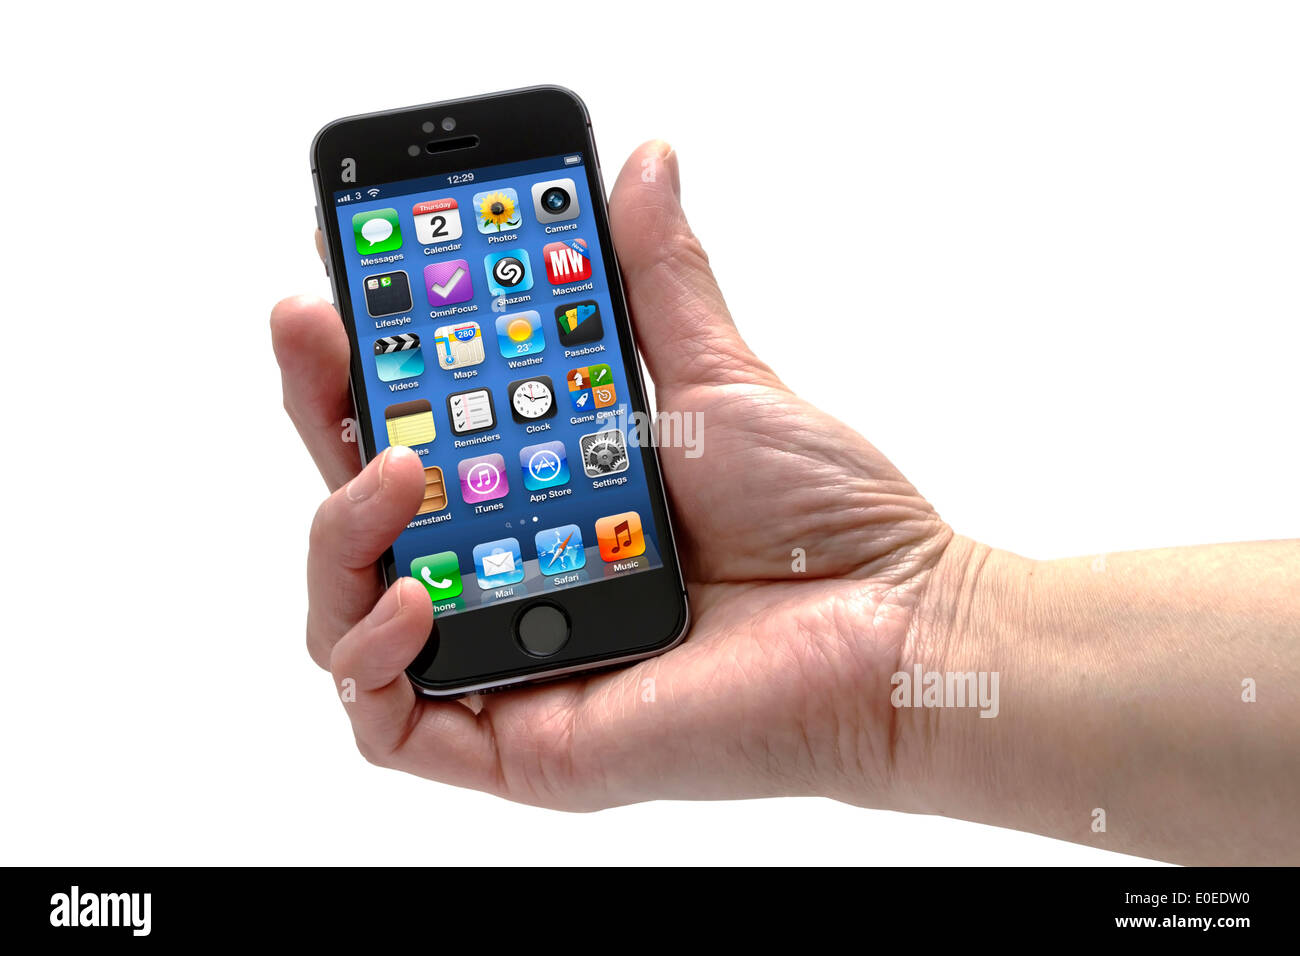 IPhone 5s in mano closeup su bianco Foto stock - Alamy